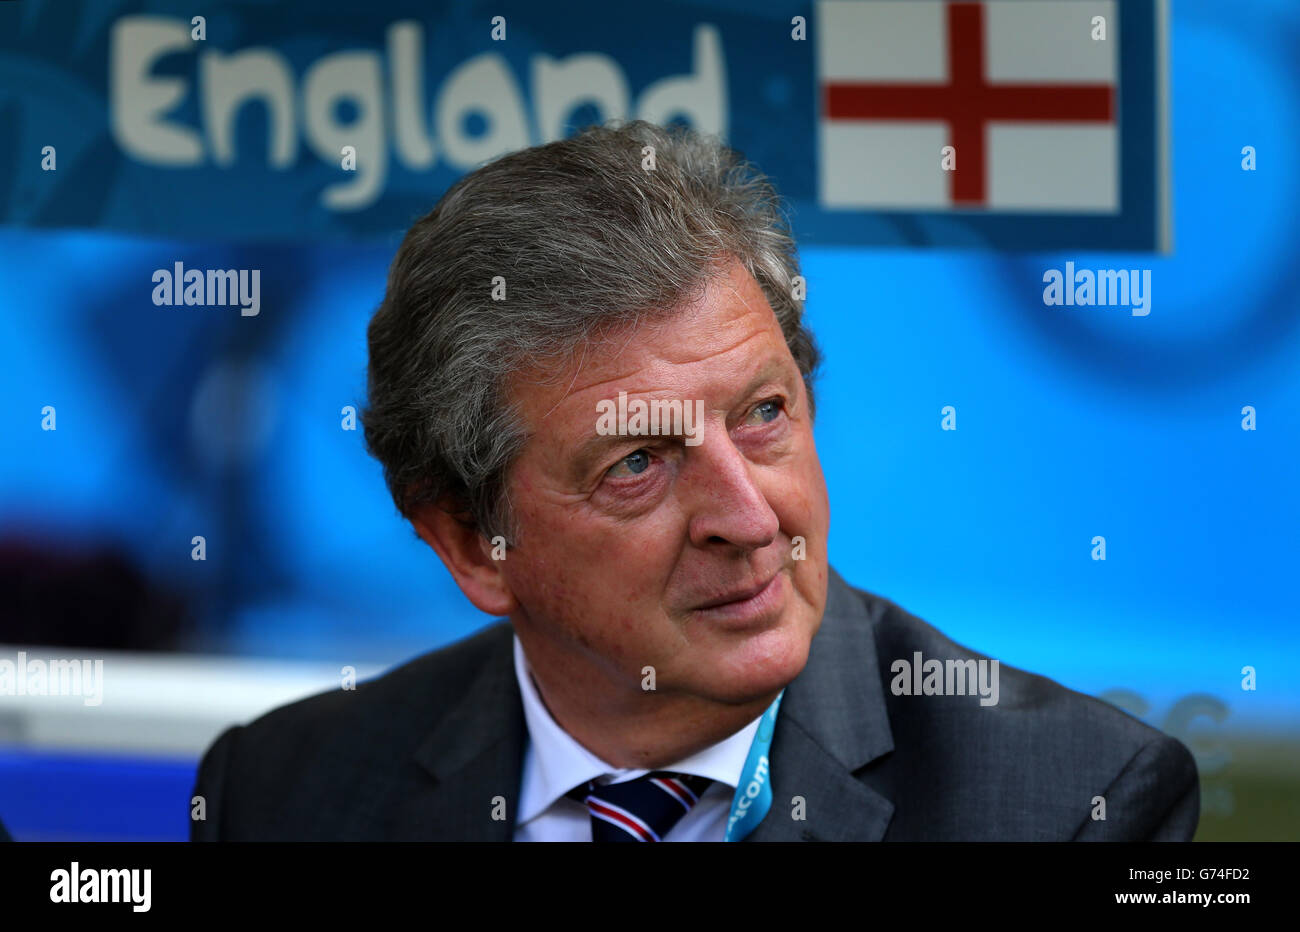 Soccer - FIFA World Cup 2014 - Group D - Costa Rica v England - Estadio Mineirao. England manager Roy Hodgson before the match Stock Photo